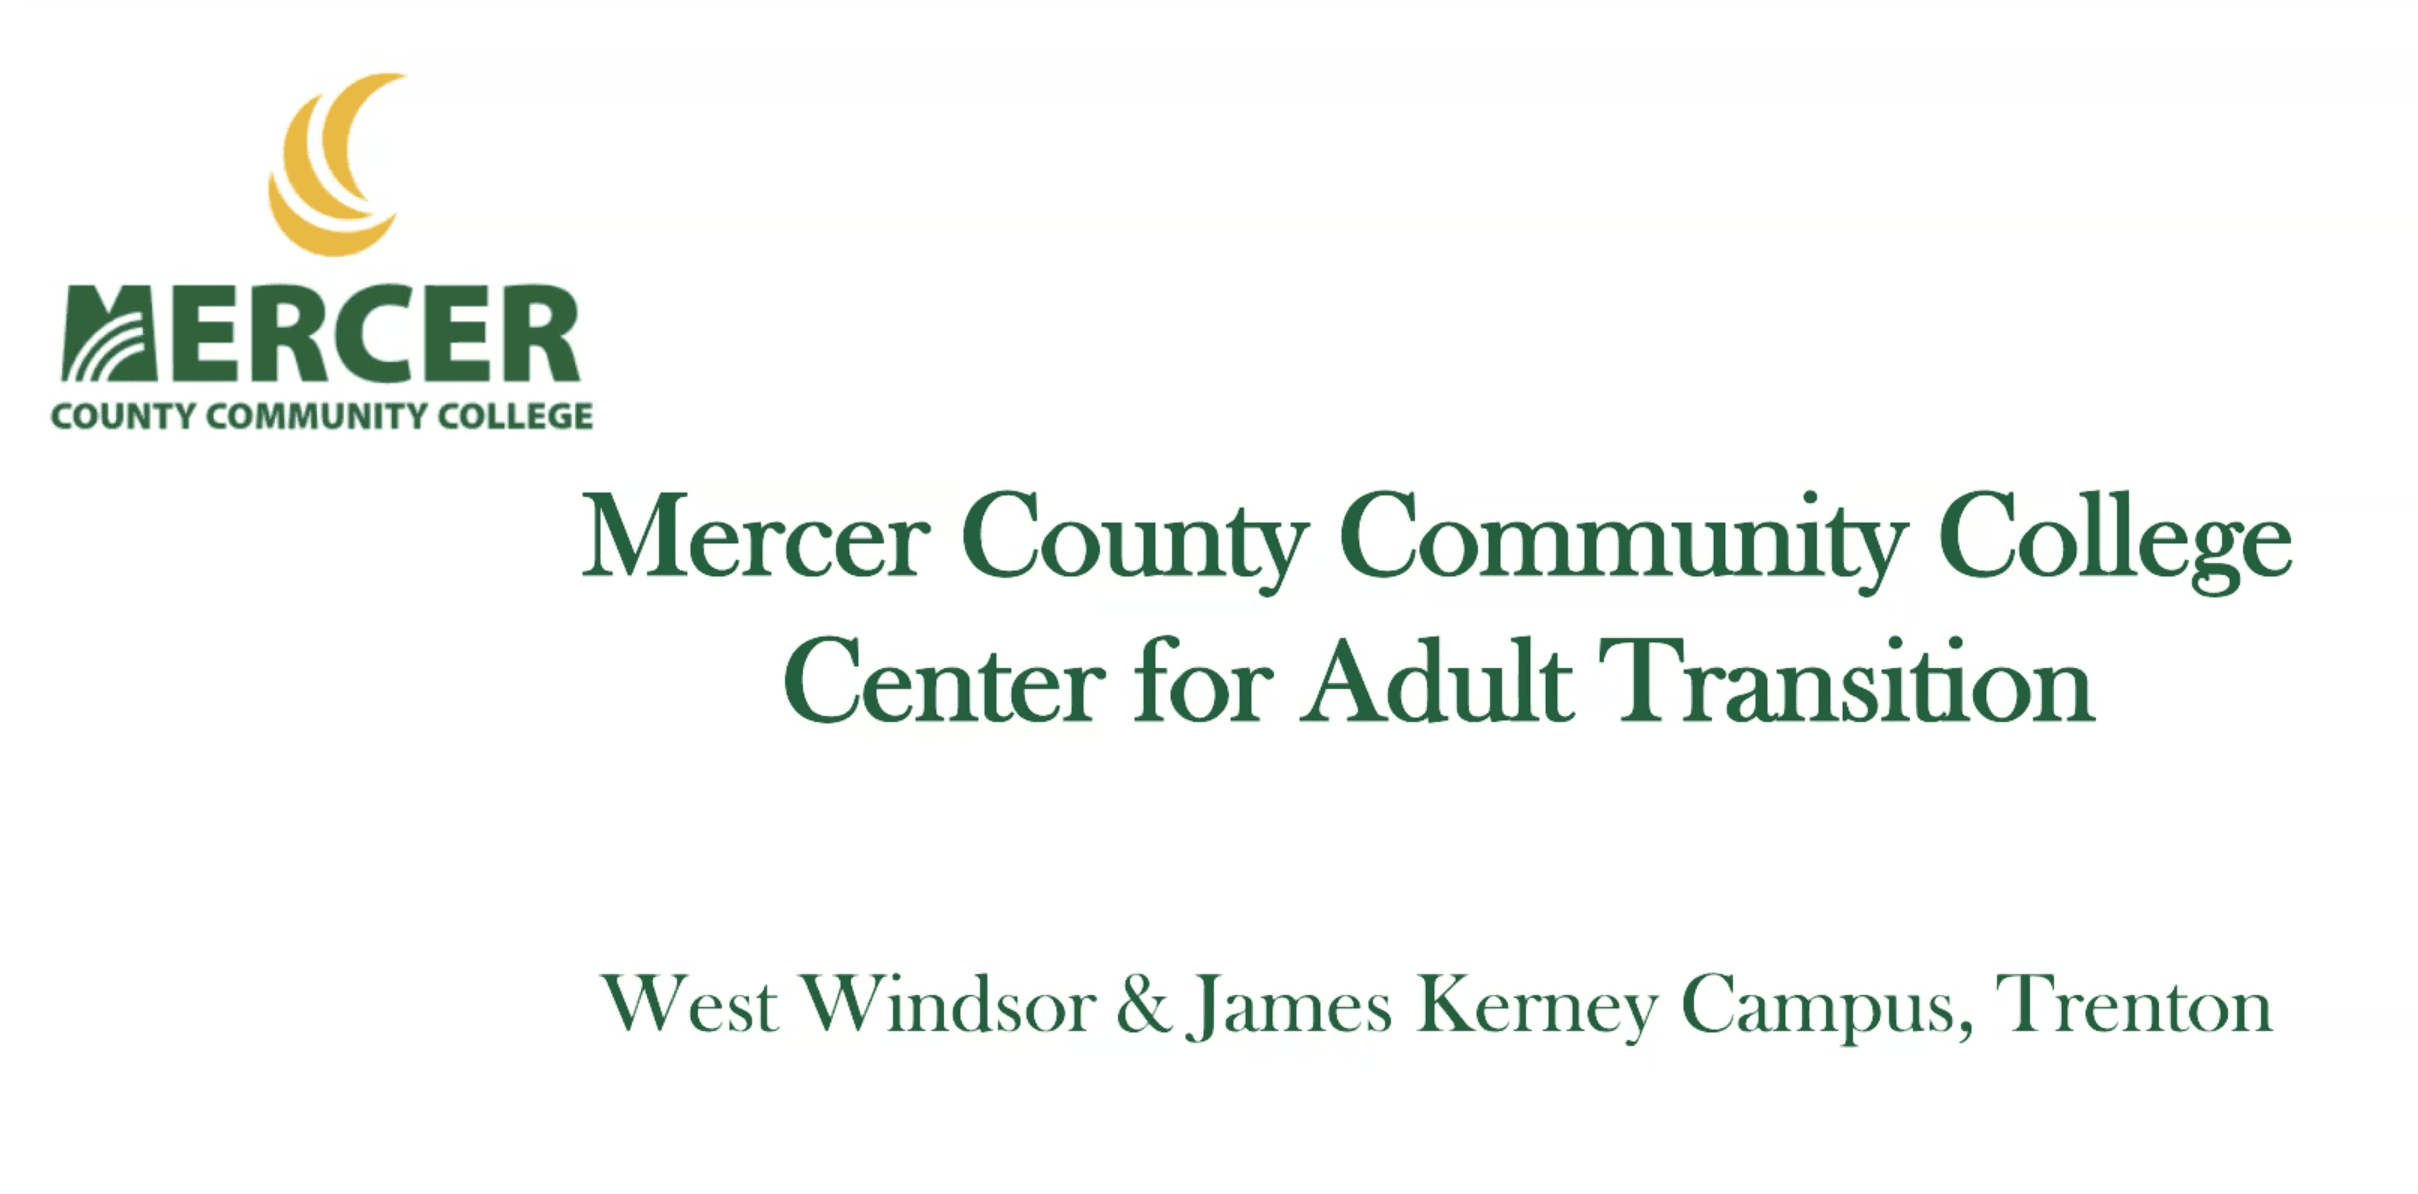 Mercer County Community College's Center for Adult Transition Program